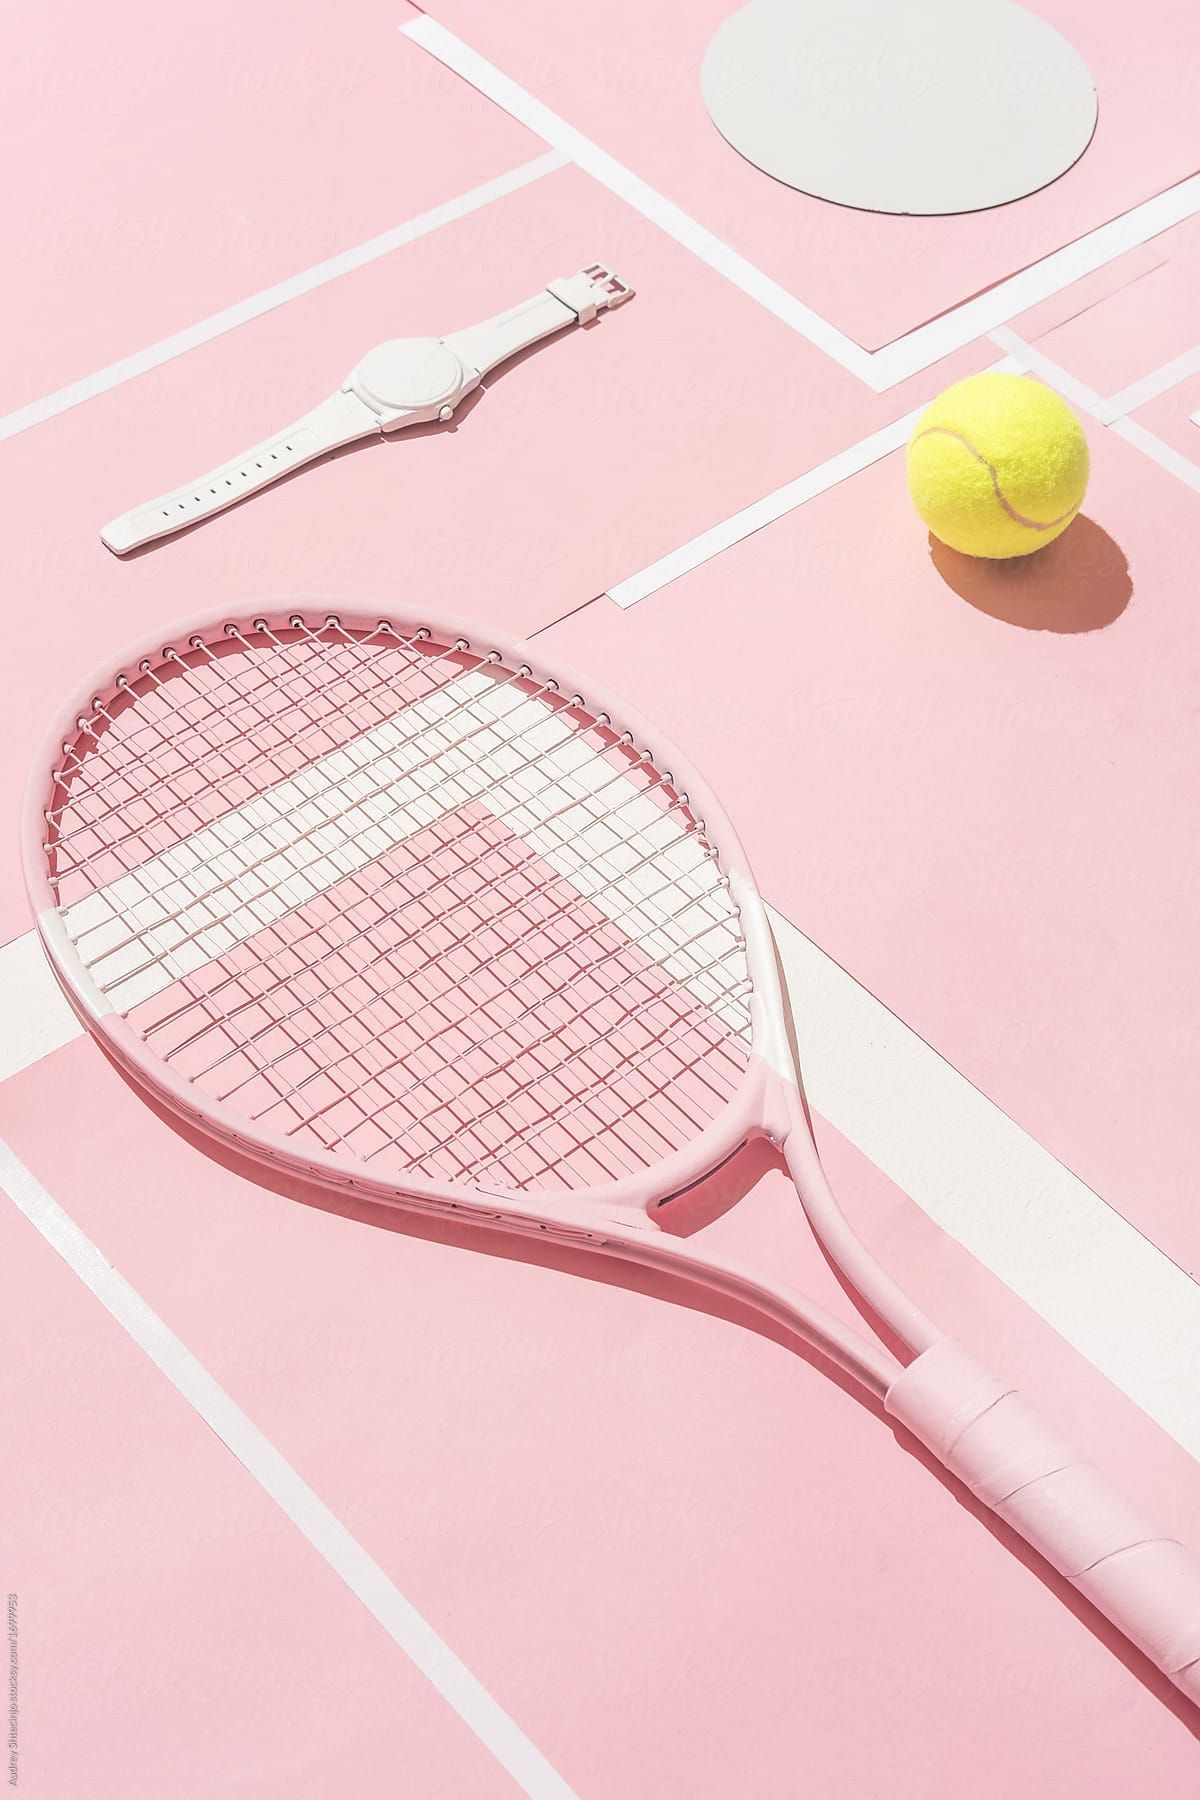 Tennis racket, ball and watch on a pink tennis court - Tennis